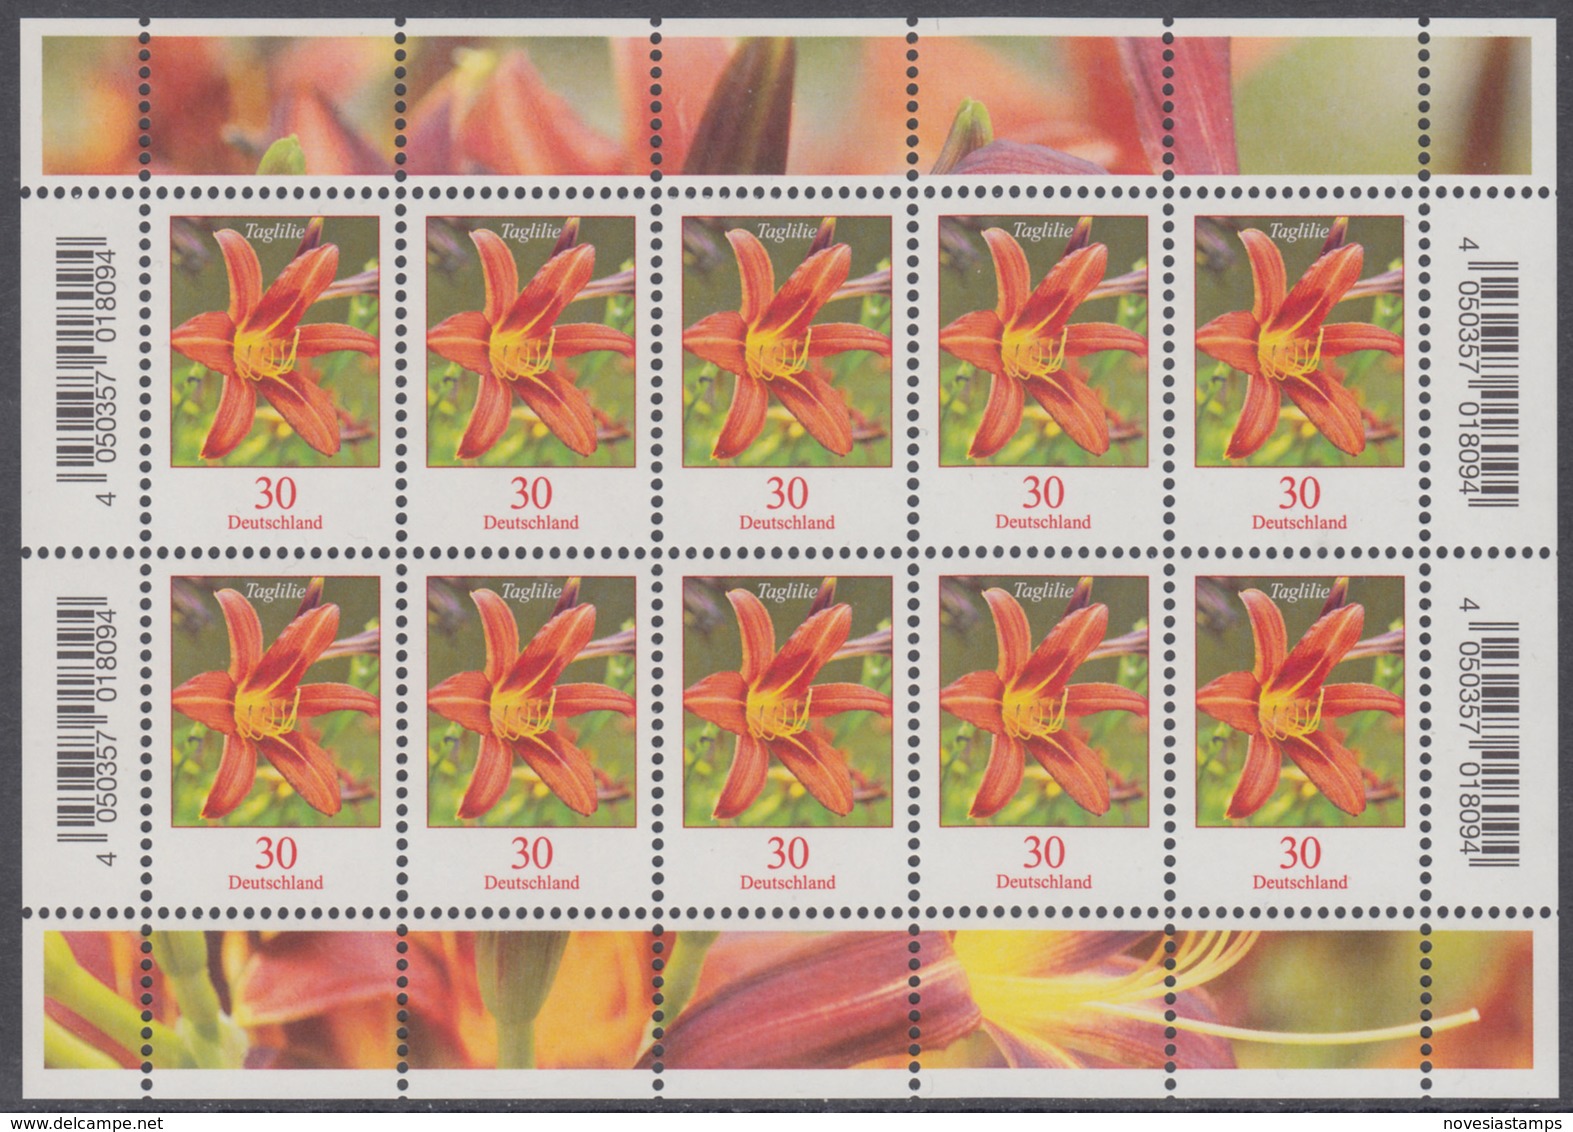 !a! GERMANY 2020 Mi. 3509 MNH SHEET(10) - Flowers: Daylily - Unused Stamps